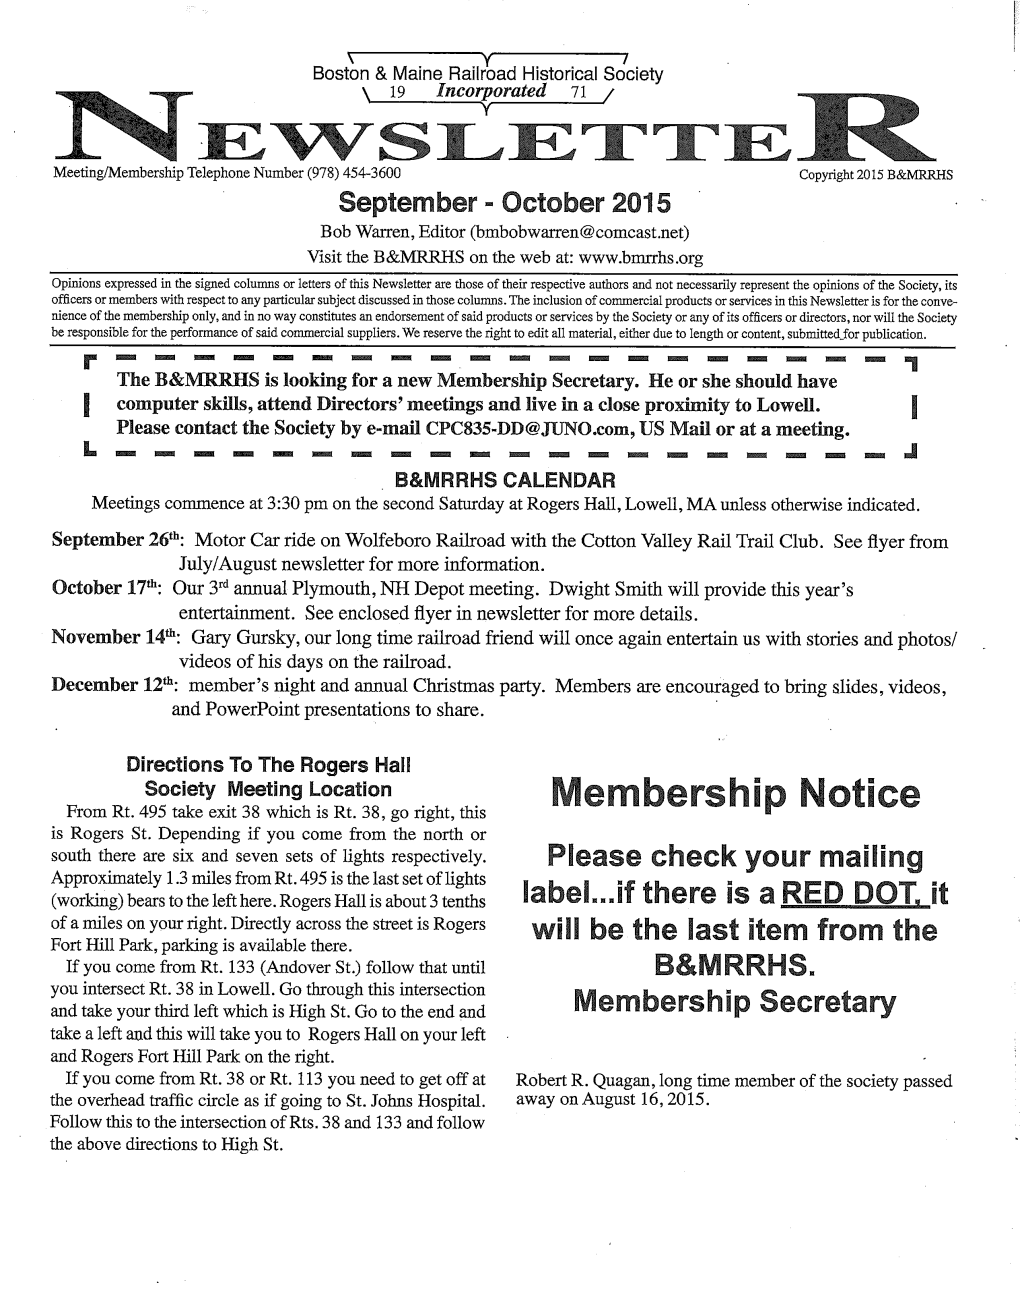 Membership Notice Is Rogers St